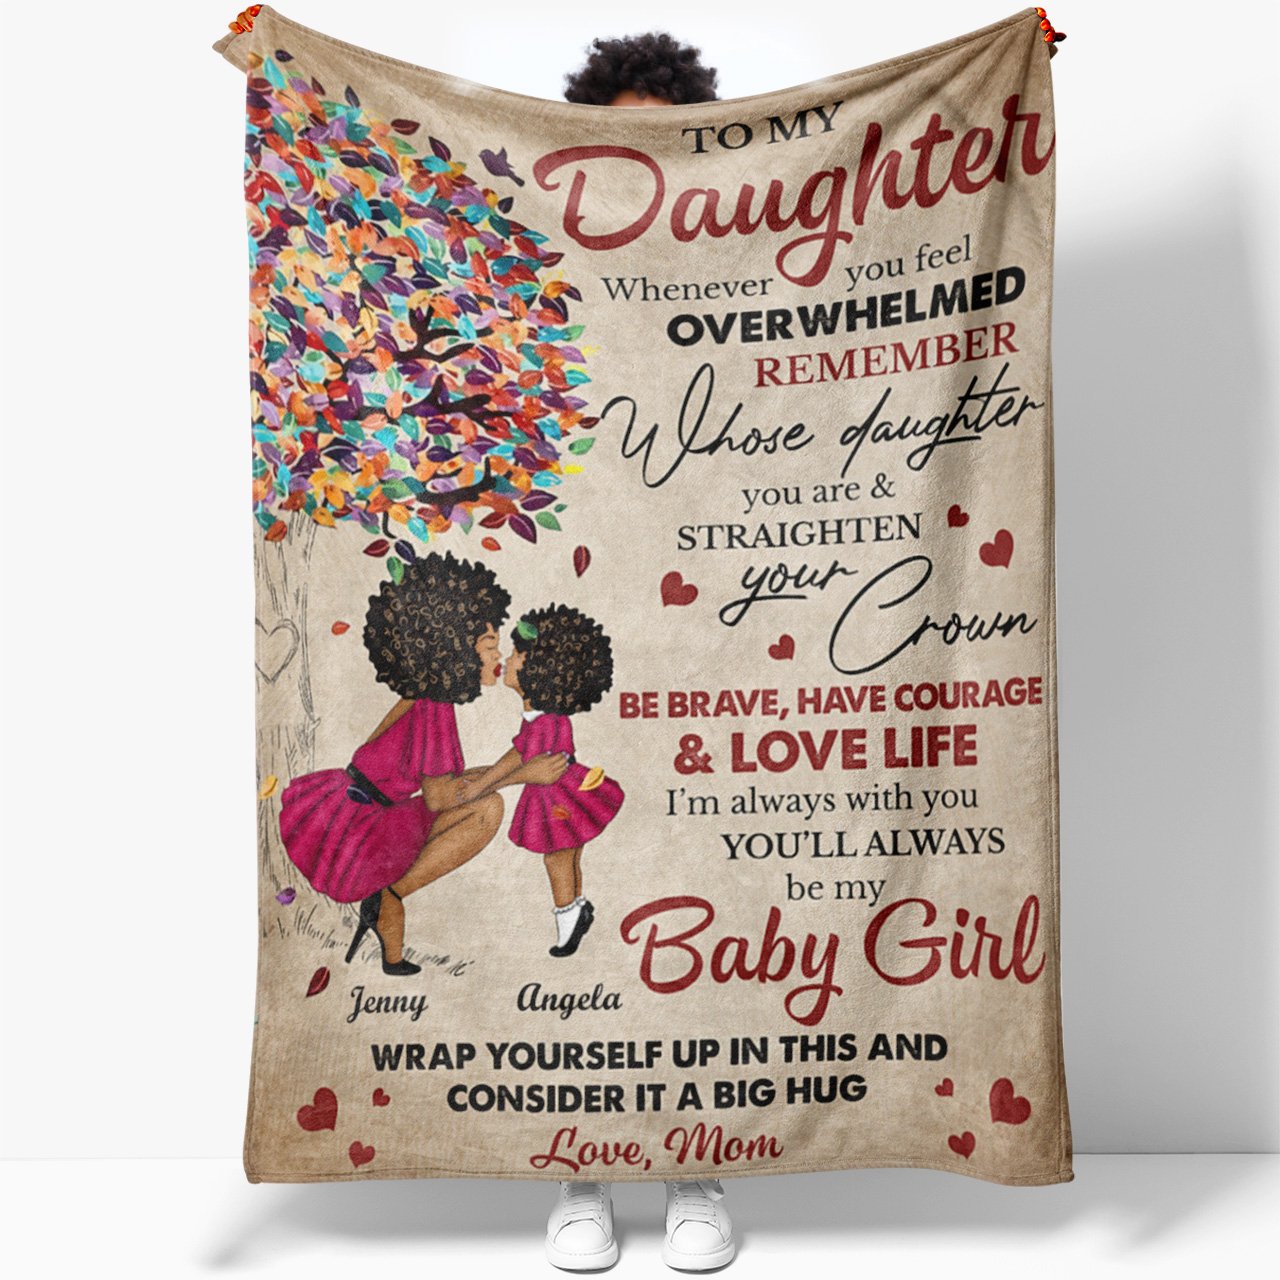 To My Daughter Blanket, Be Brave Have Courage Love Life Blanket for Black Girl, Sentimental Gifts For Daughter From Mom, Christmas Gifts For Daughter